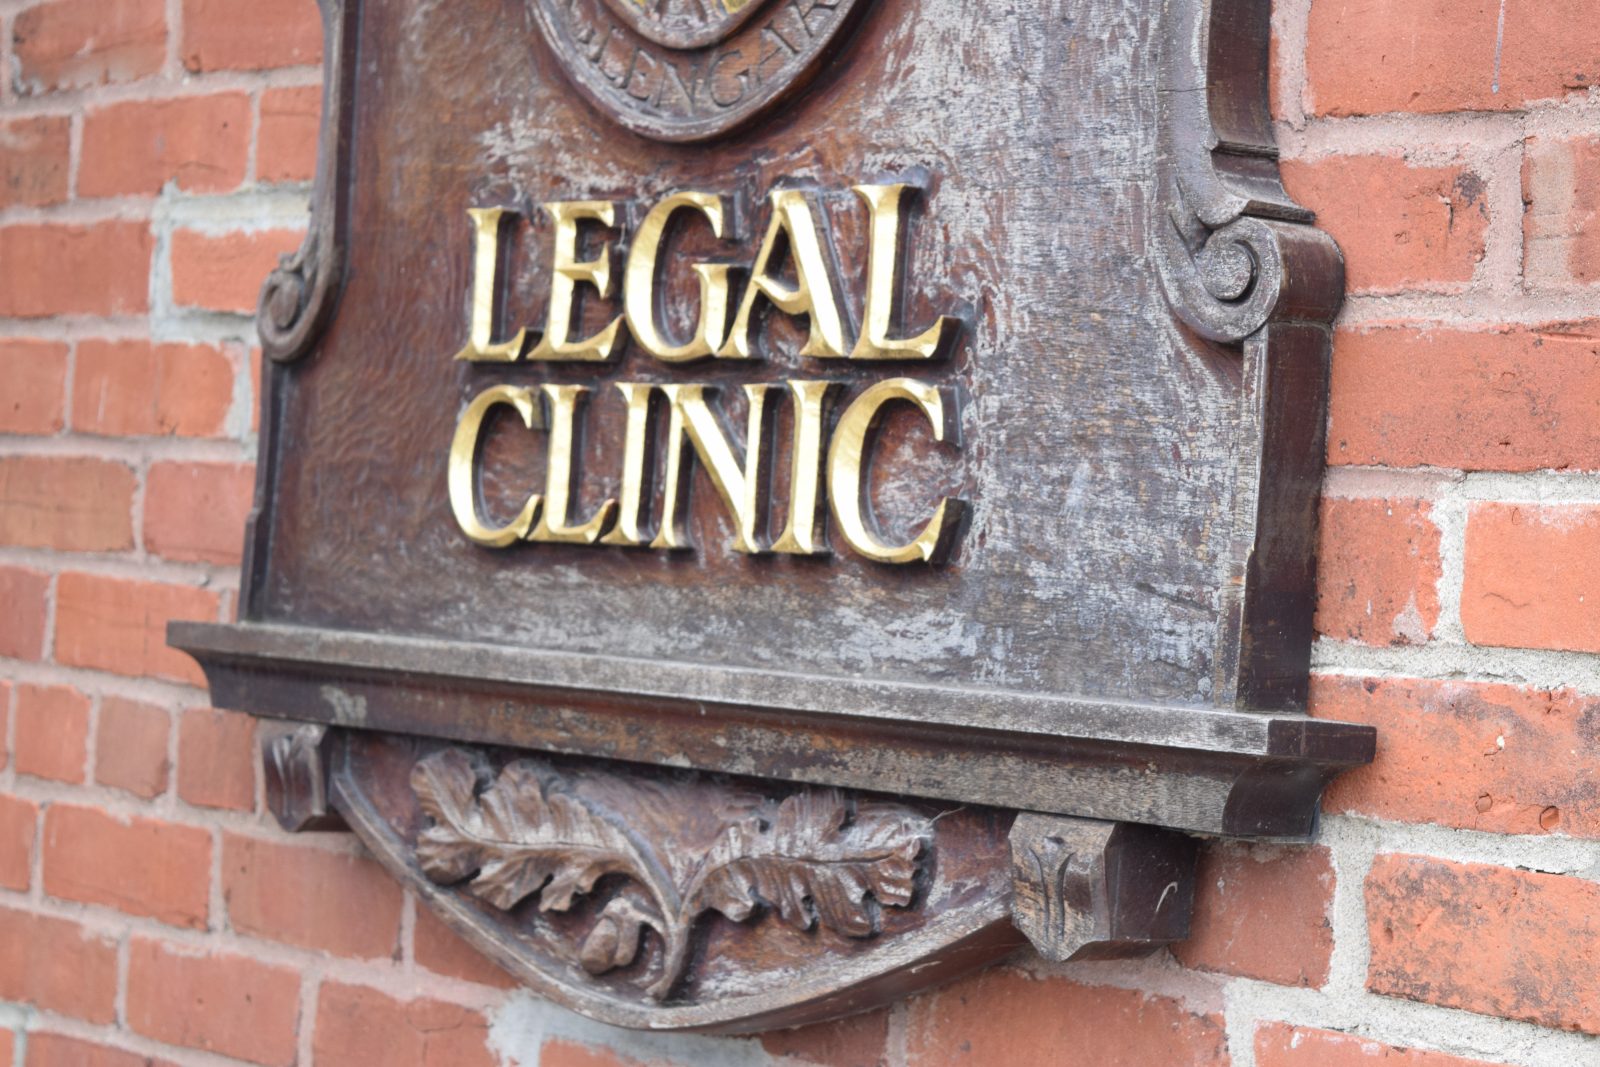 Cornwall lawyer calls Legal Aid cuts “travesty”